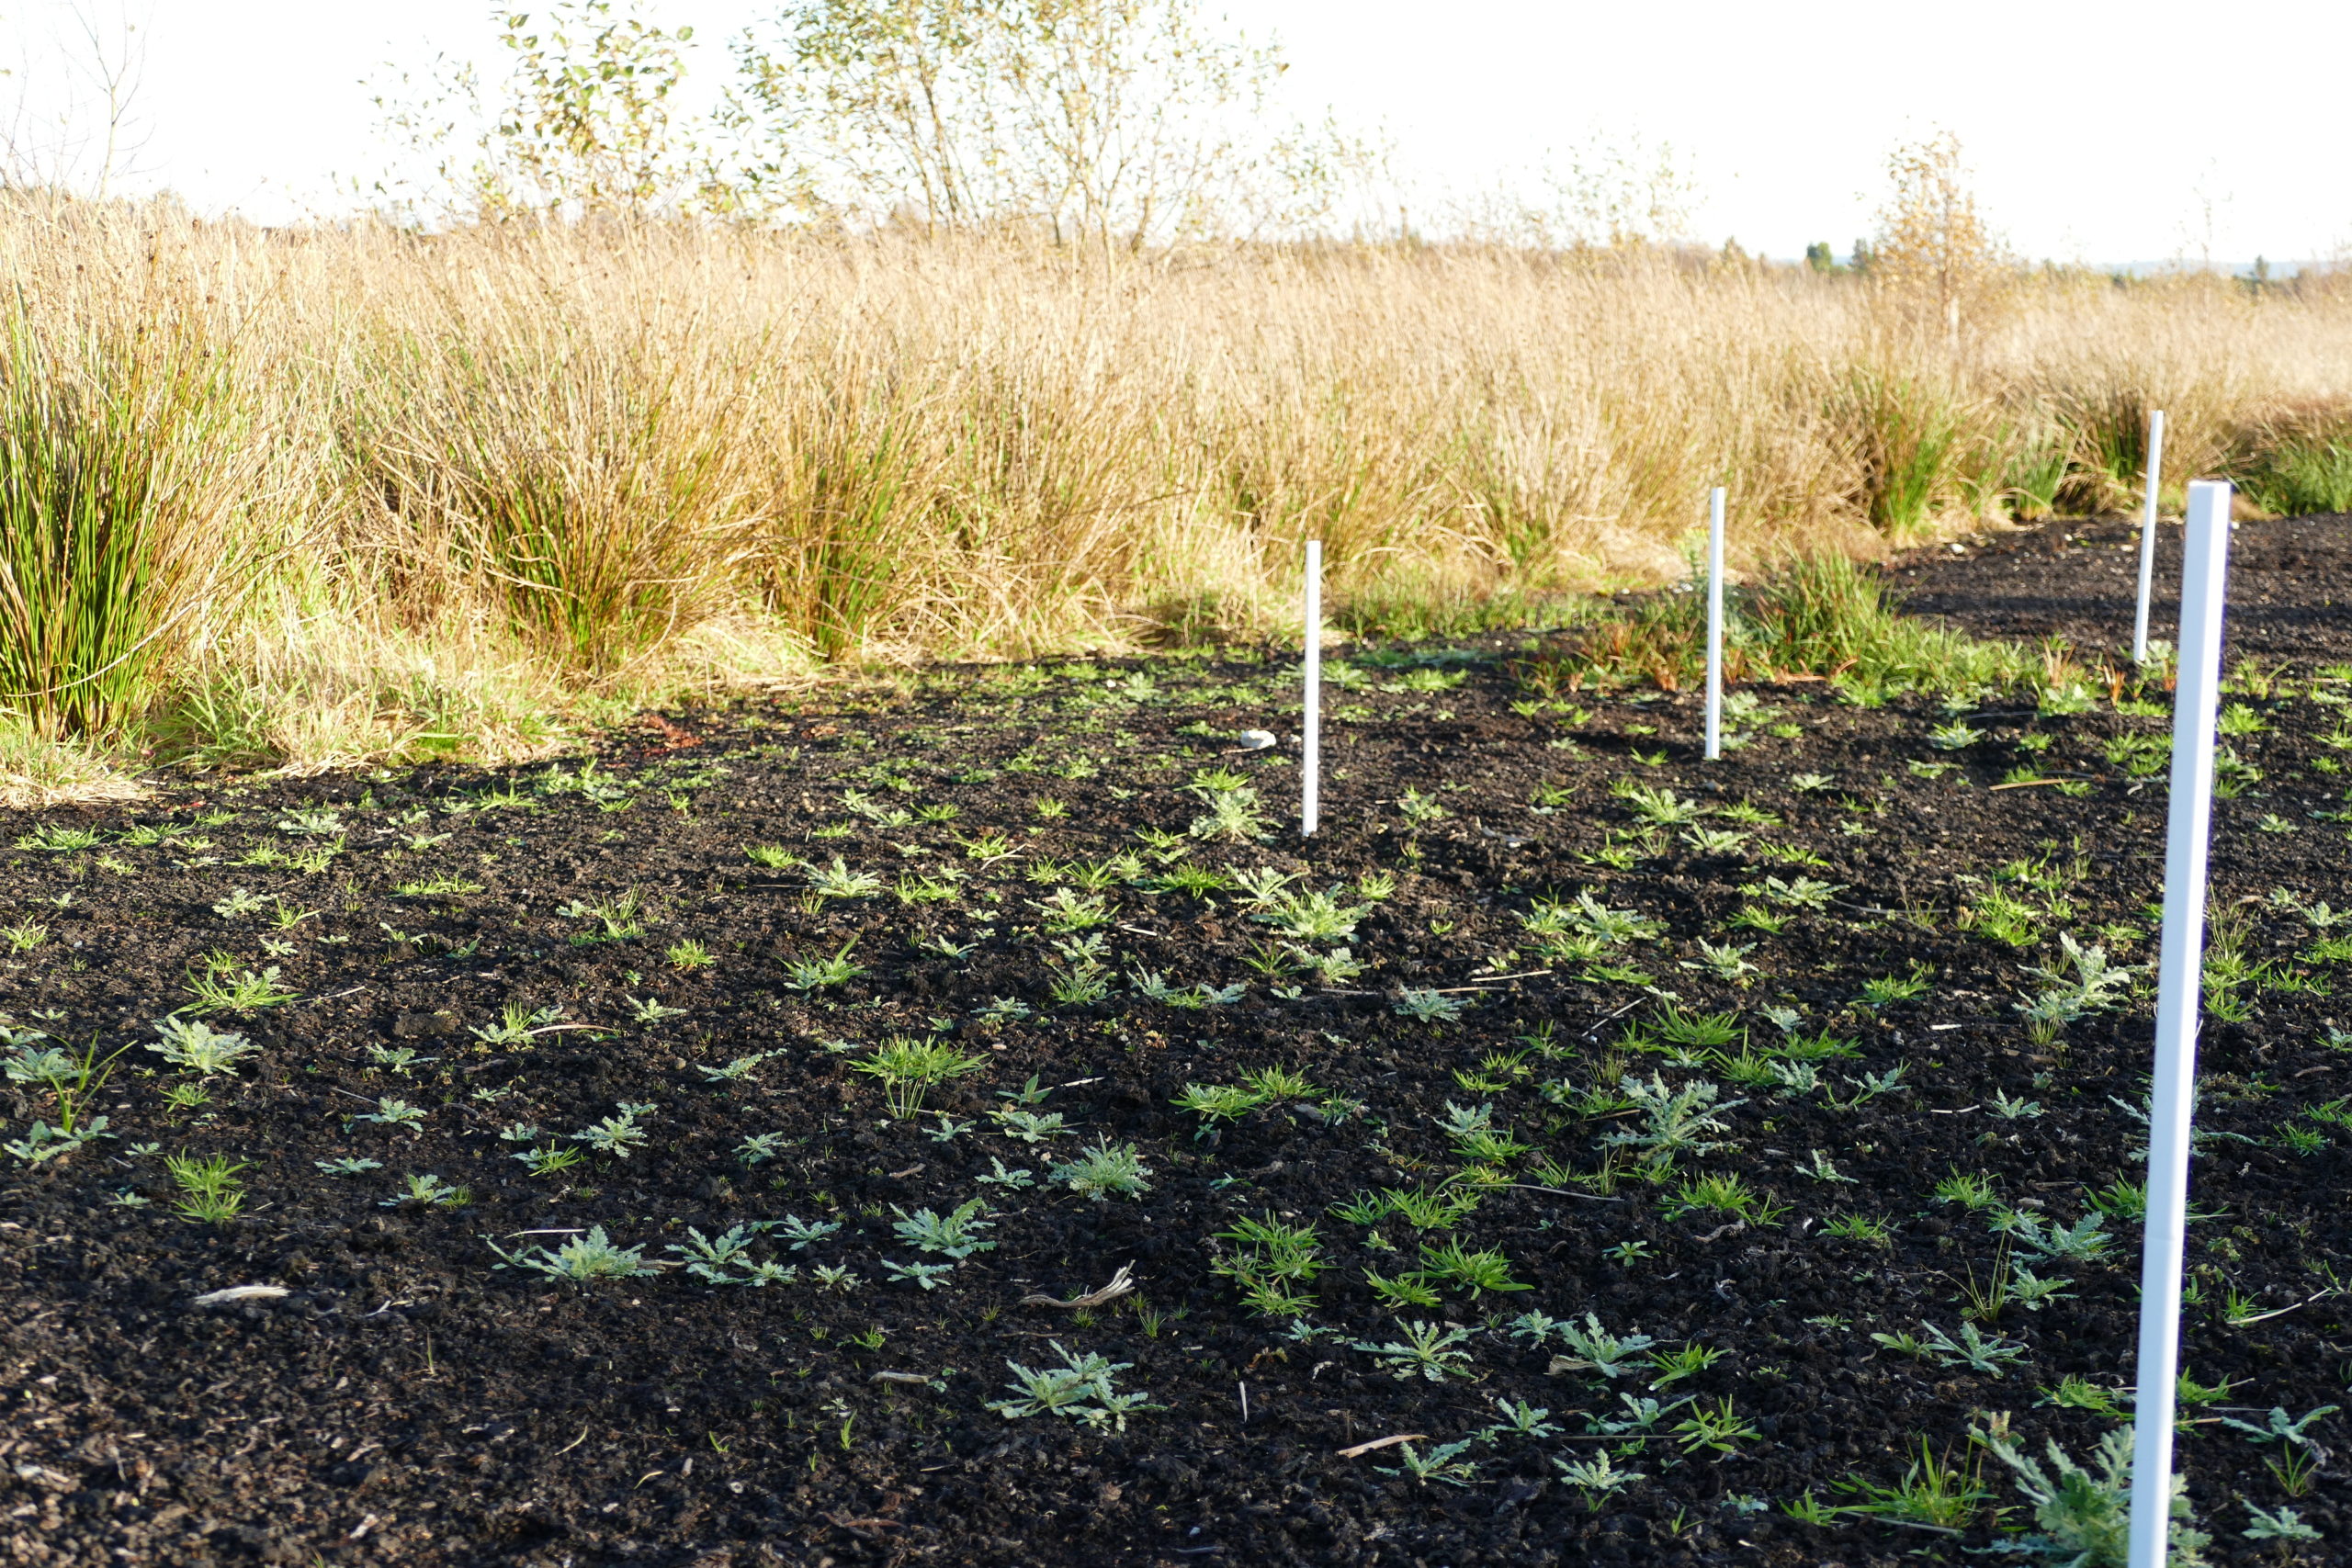 Seedlings emerging on a seeded and fertilised plot